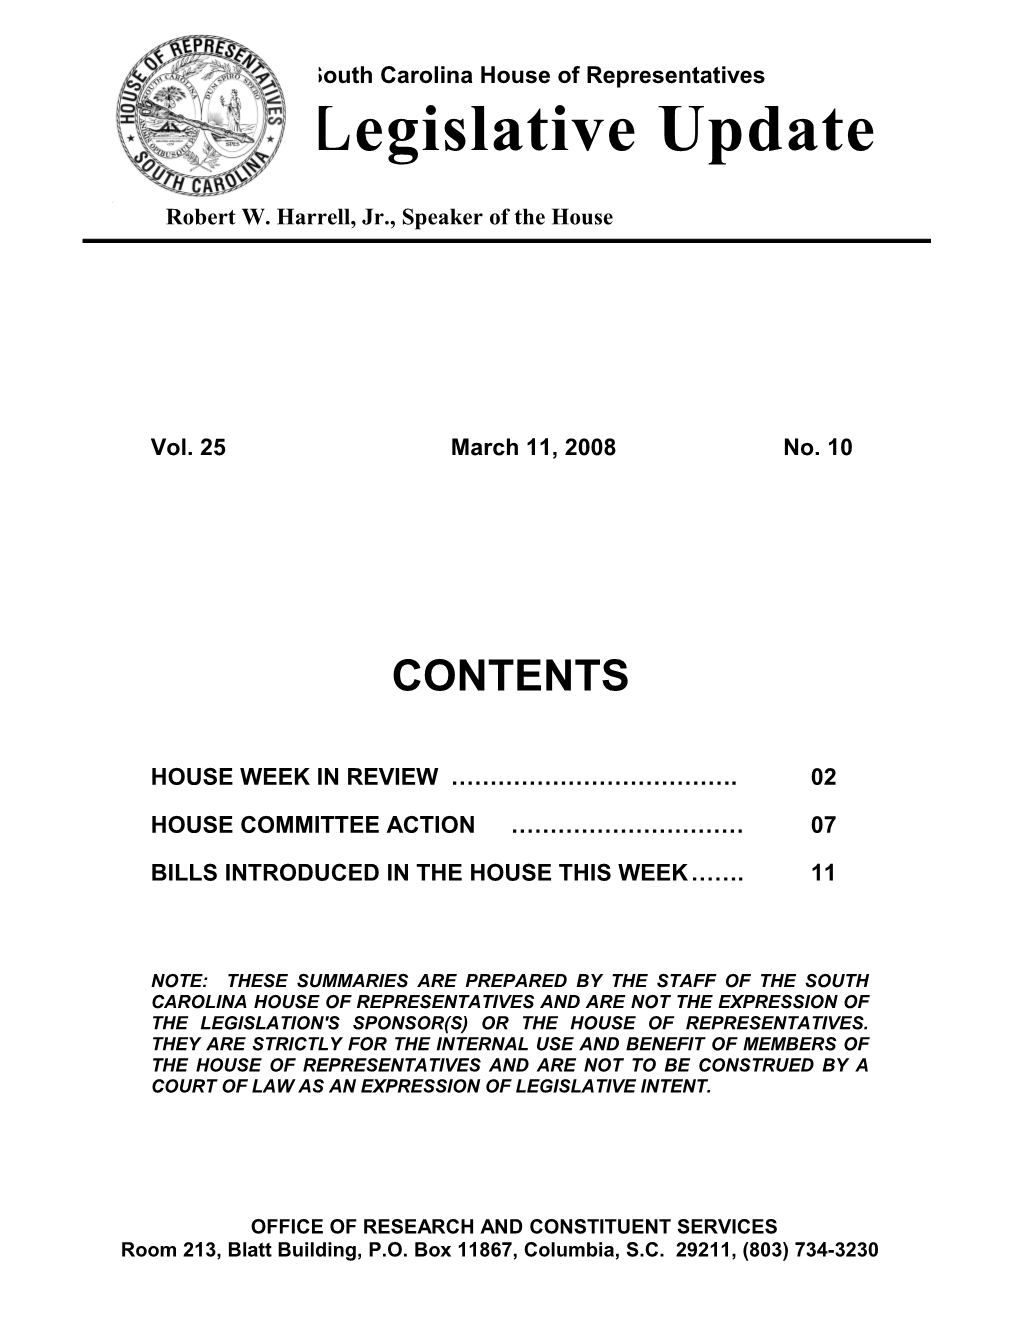 Legislative Update - Vol. 25 No. 10 March 11, 2008 - South Carolina Legislature Online